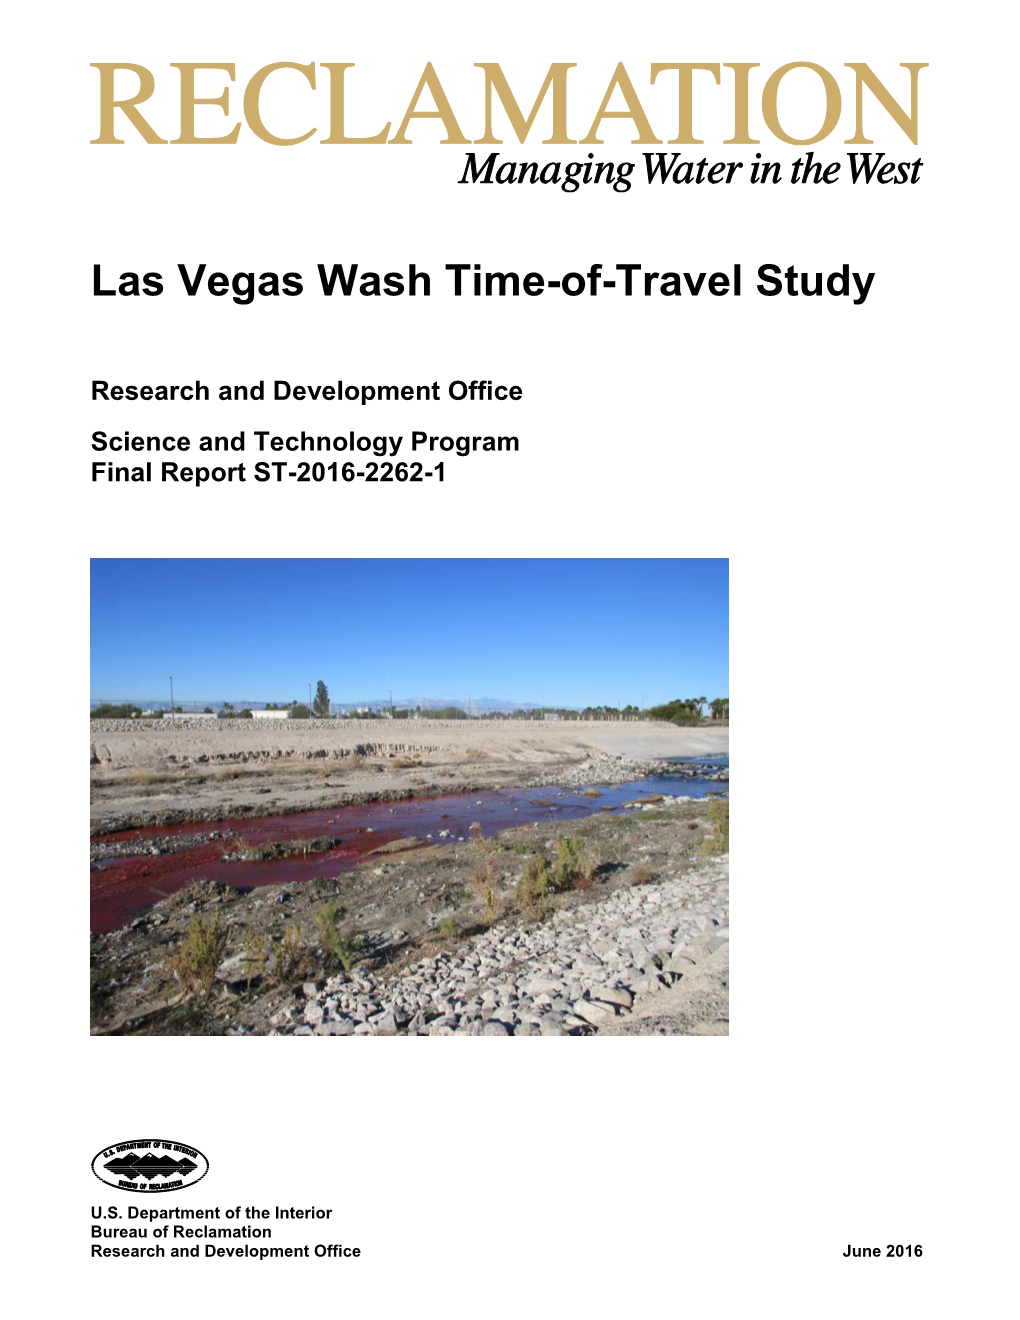 Las Vegas Wash Time-Of-Travel Study